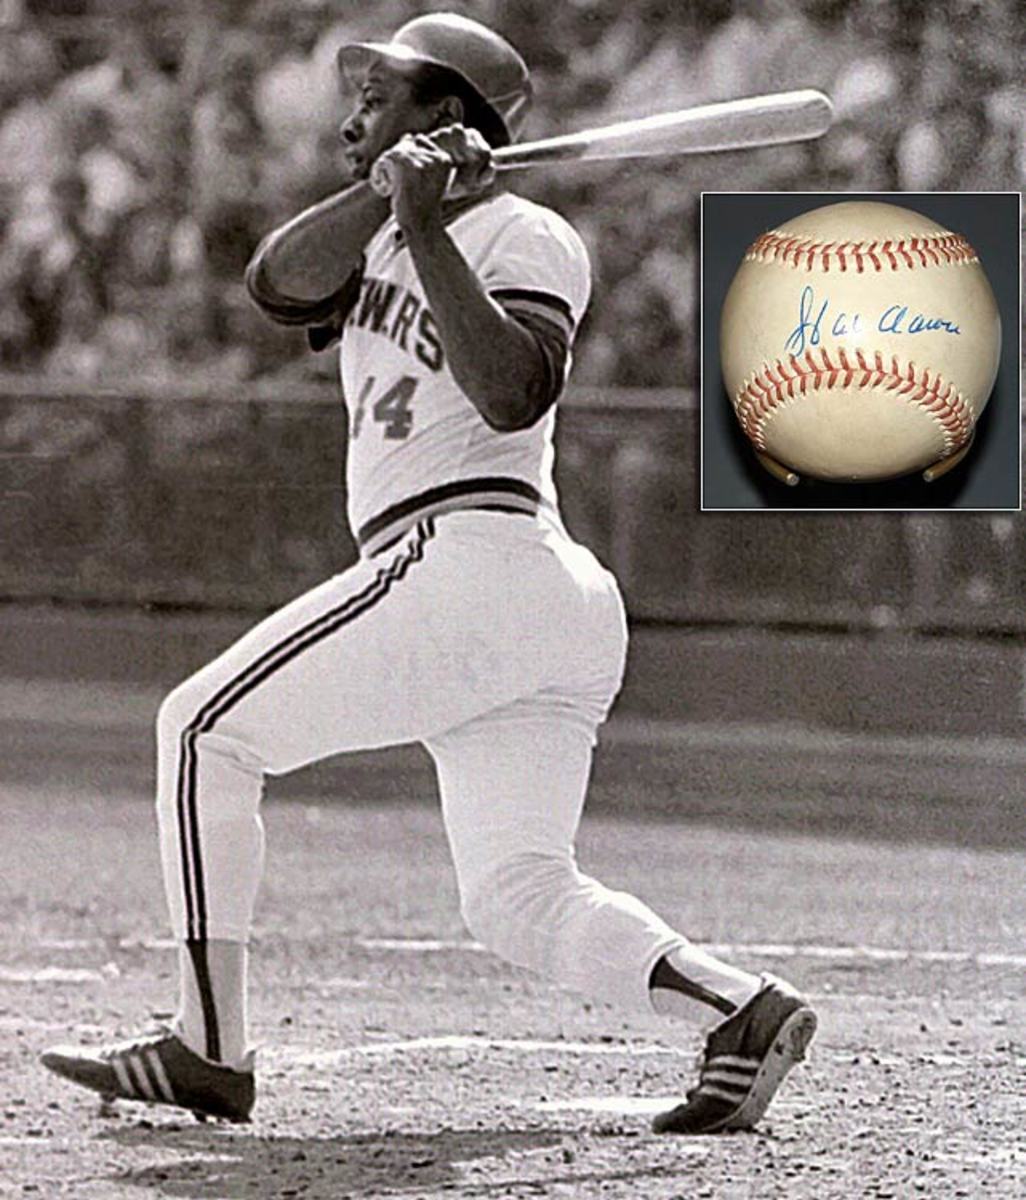 Hank Aaron 755th Home Run Ball (1976)